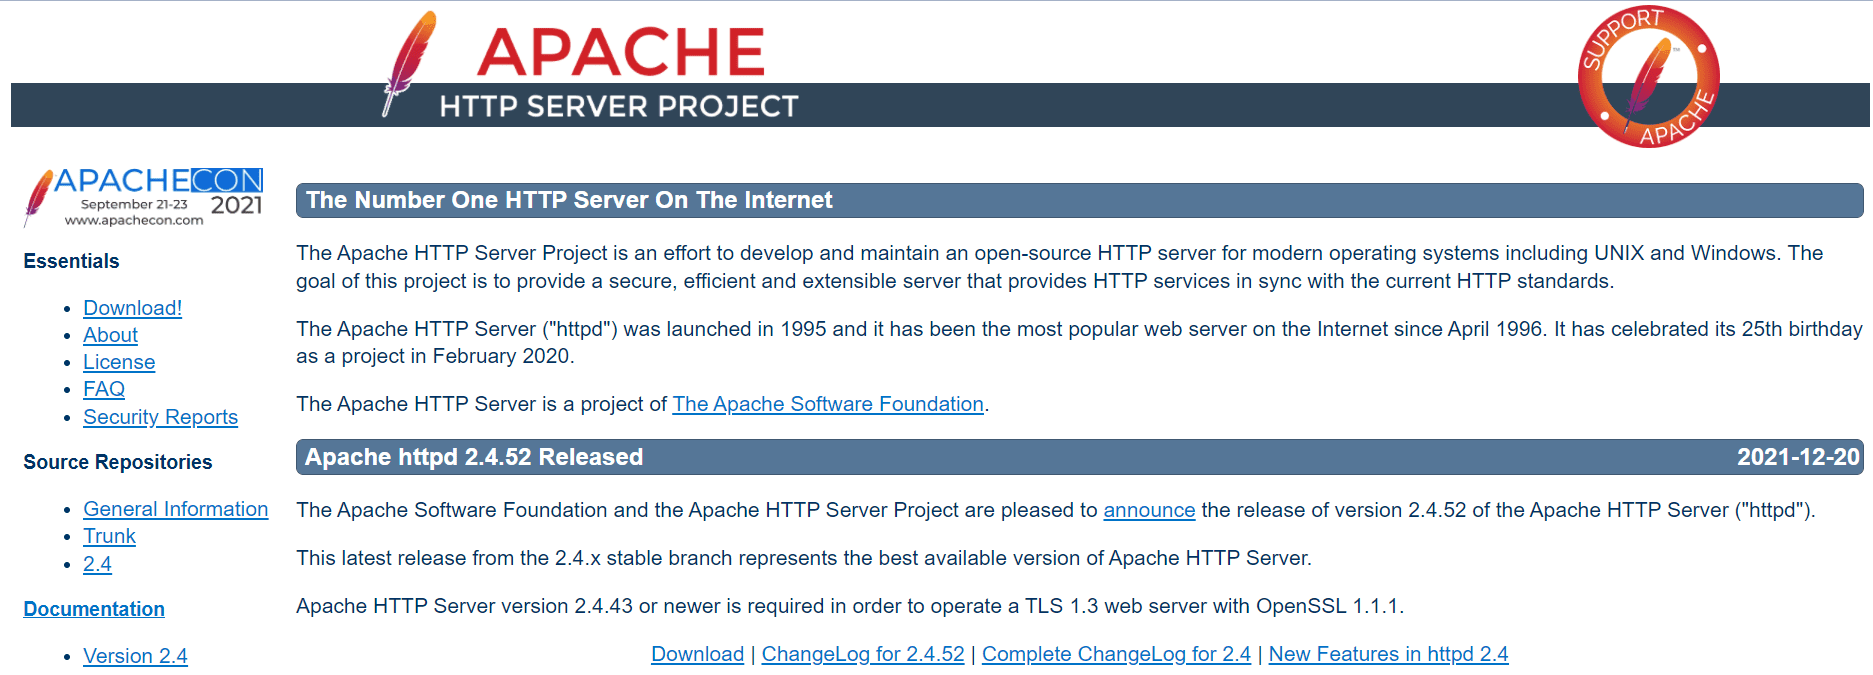 Apache homepage. 